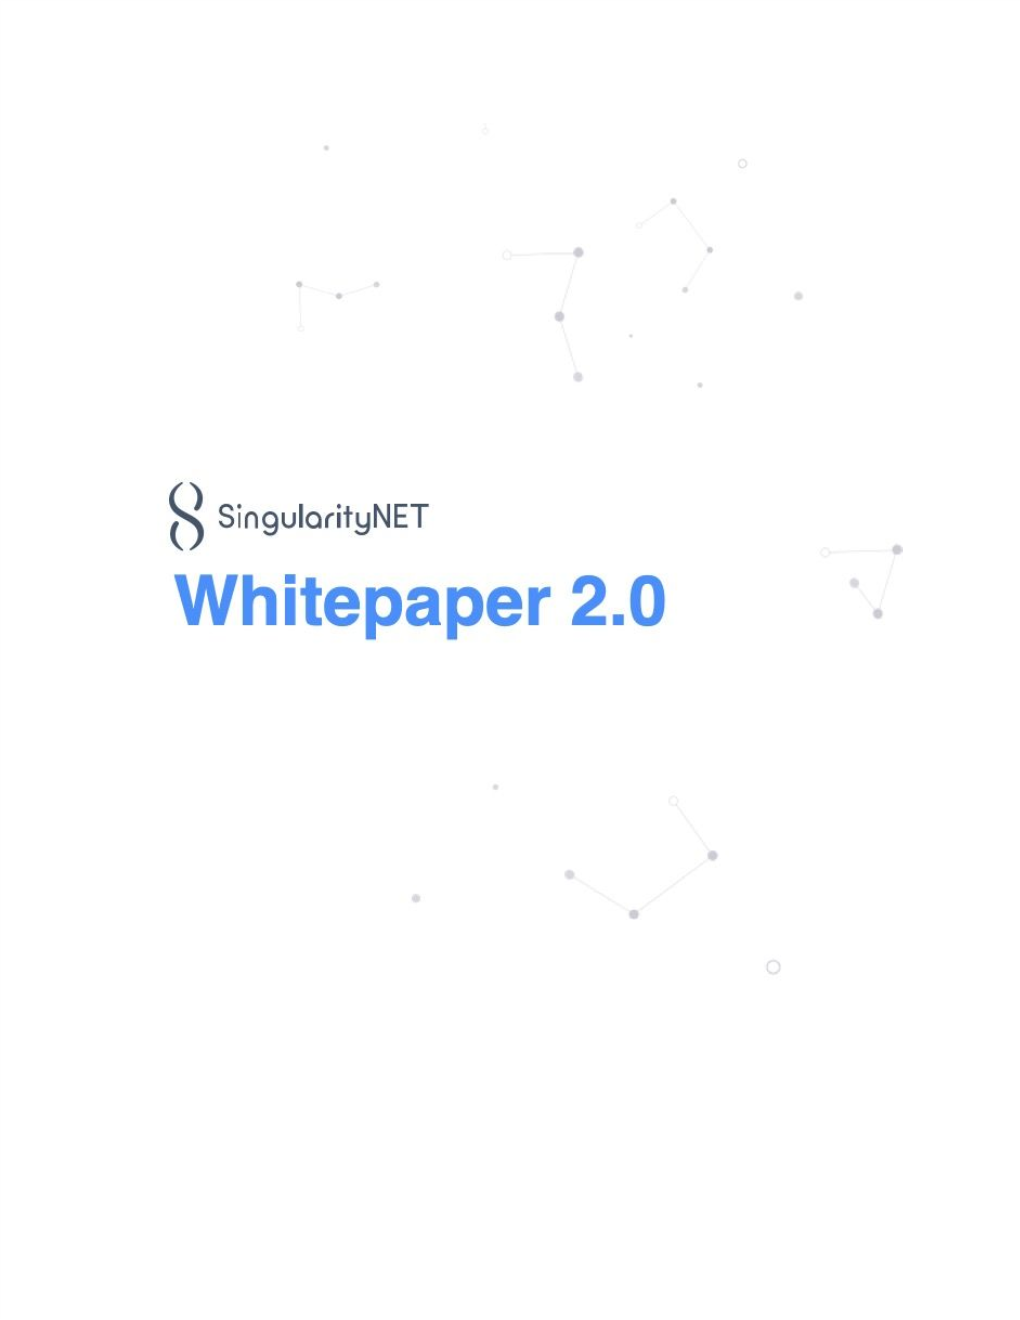 Singularitynet: Whitepaper